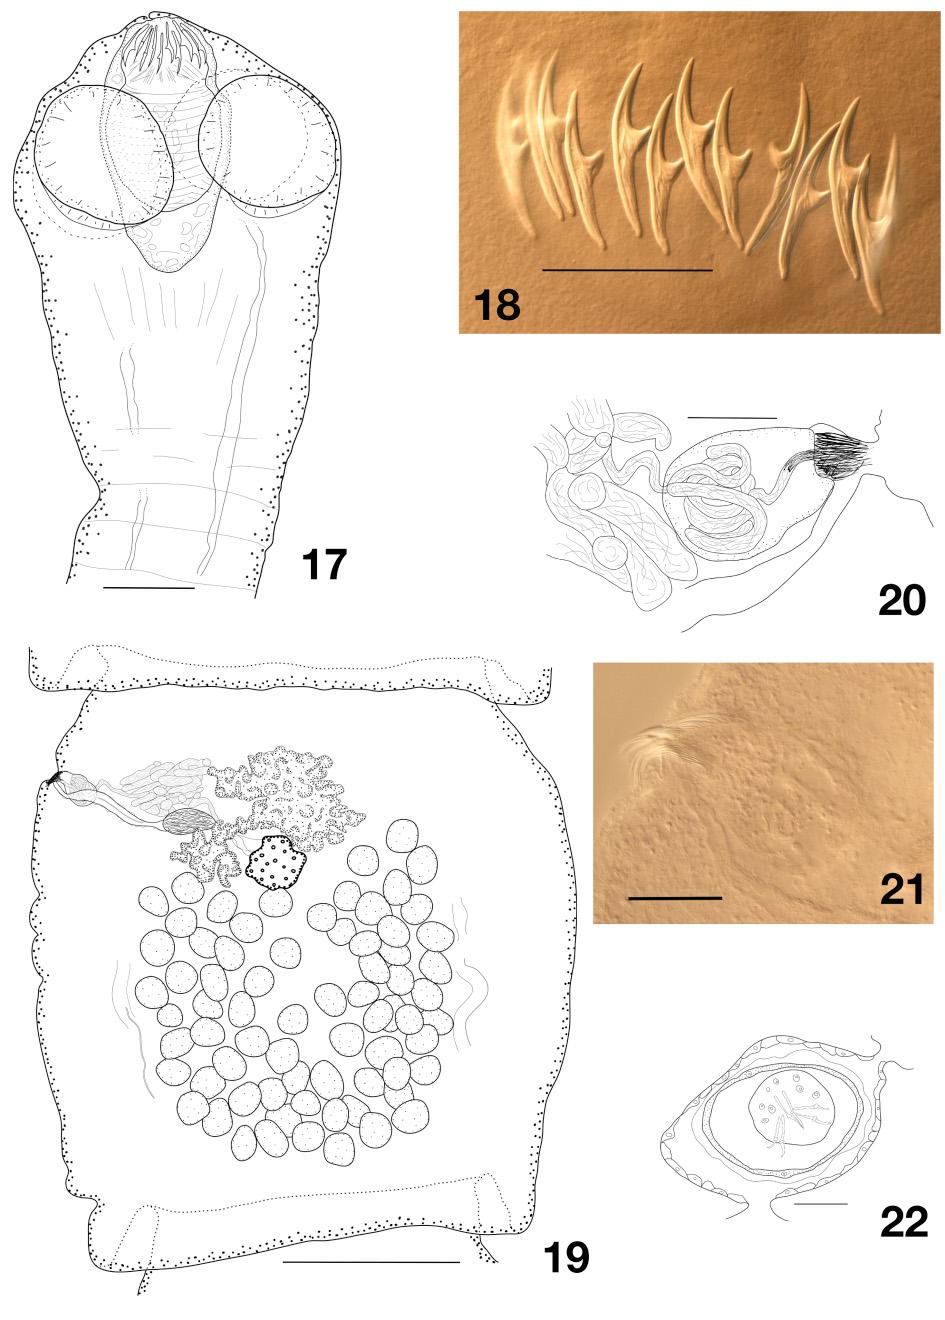 MARIAUX J. & GEORGIEV B.B., Cestodes from Australian birds Figs 17 22. Dictymetra gerganae sp. nov. 17. Scolex. 18. Hooks. 19.